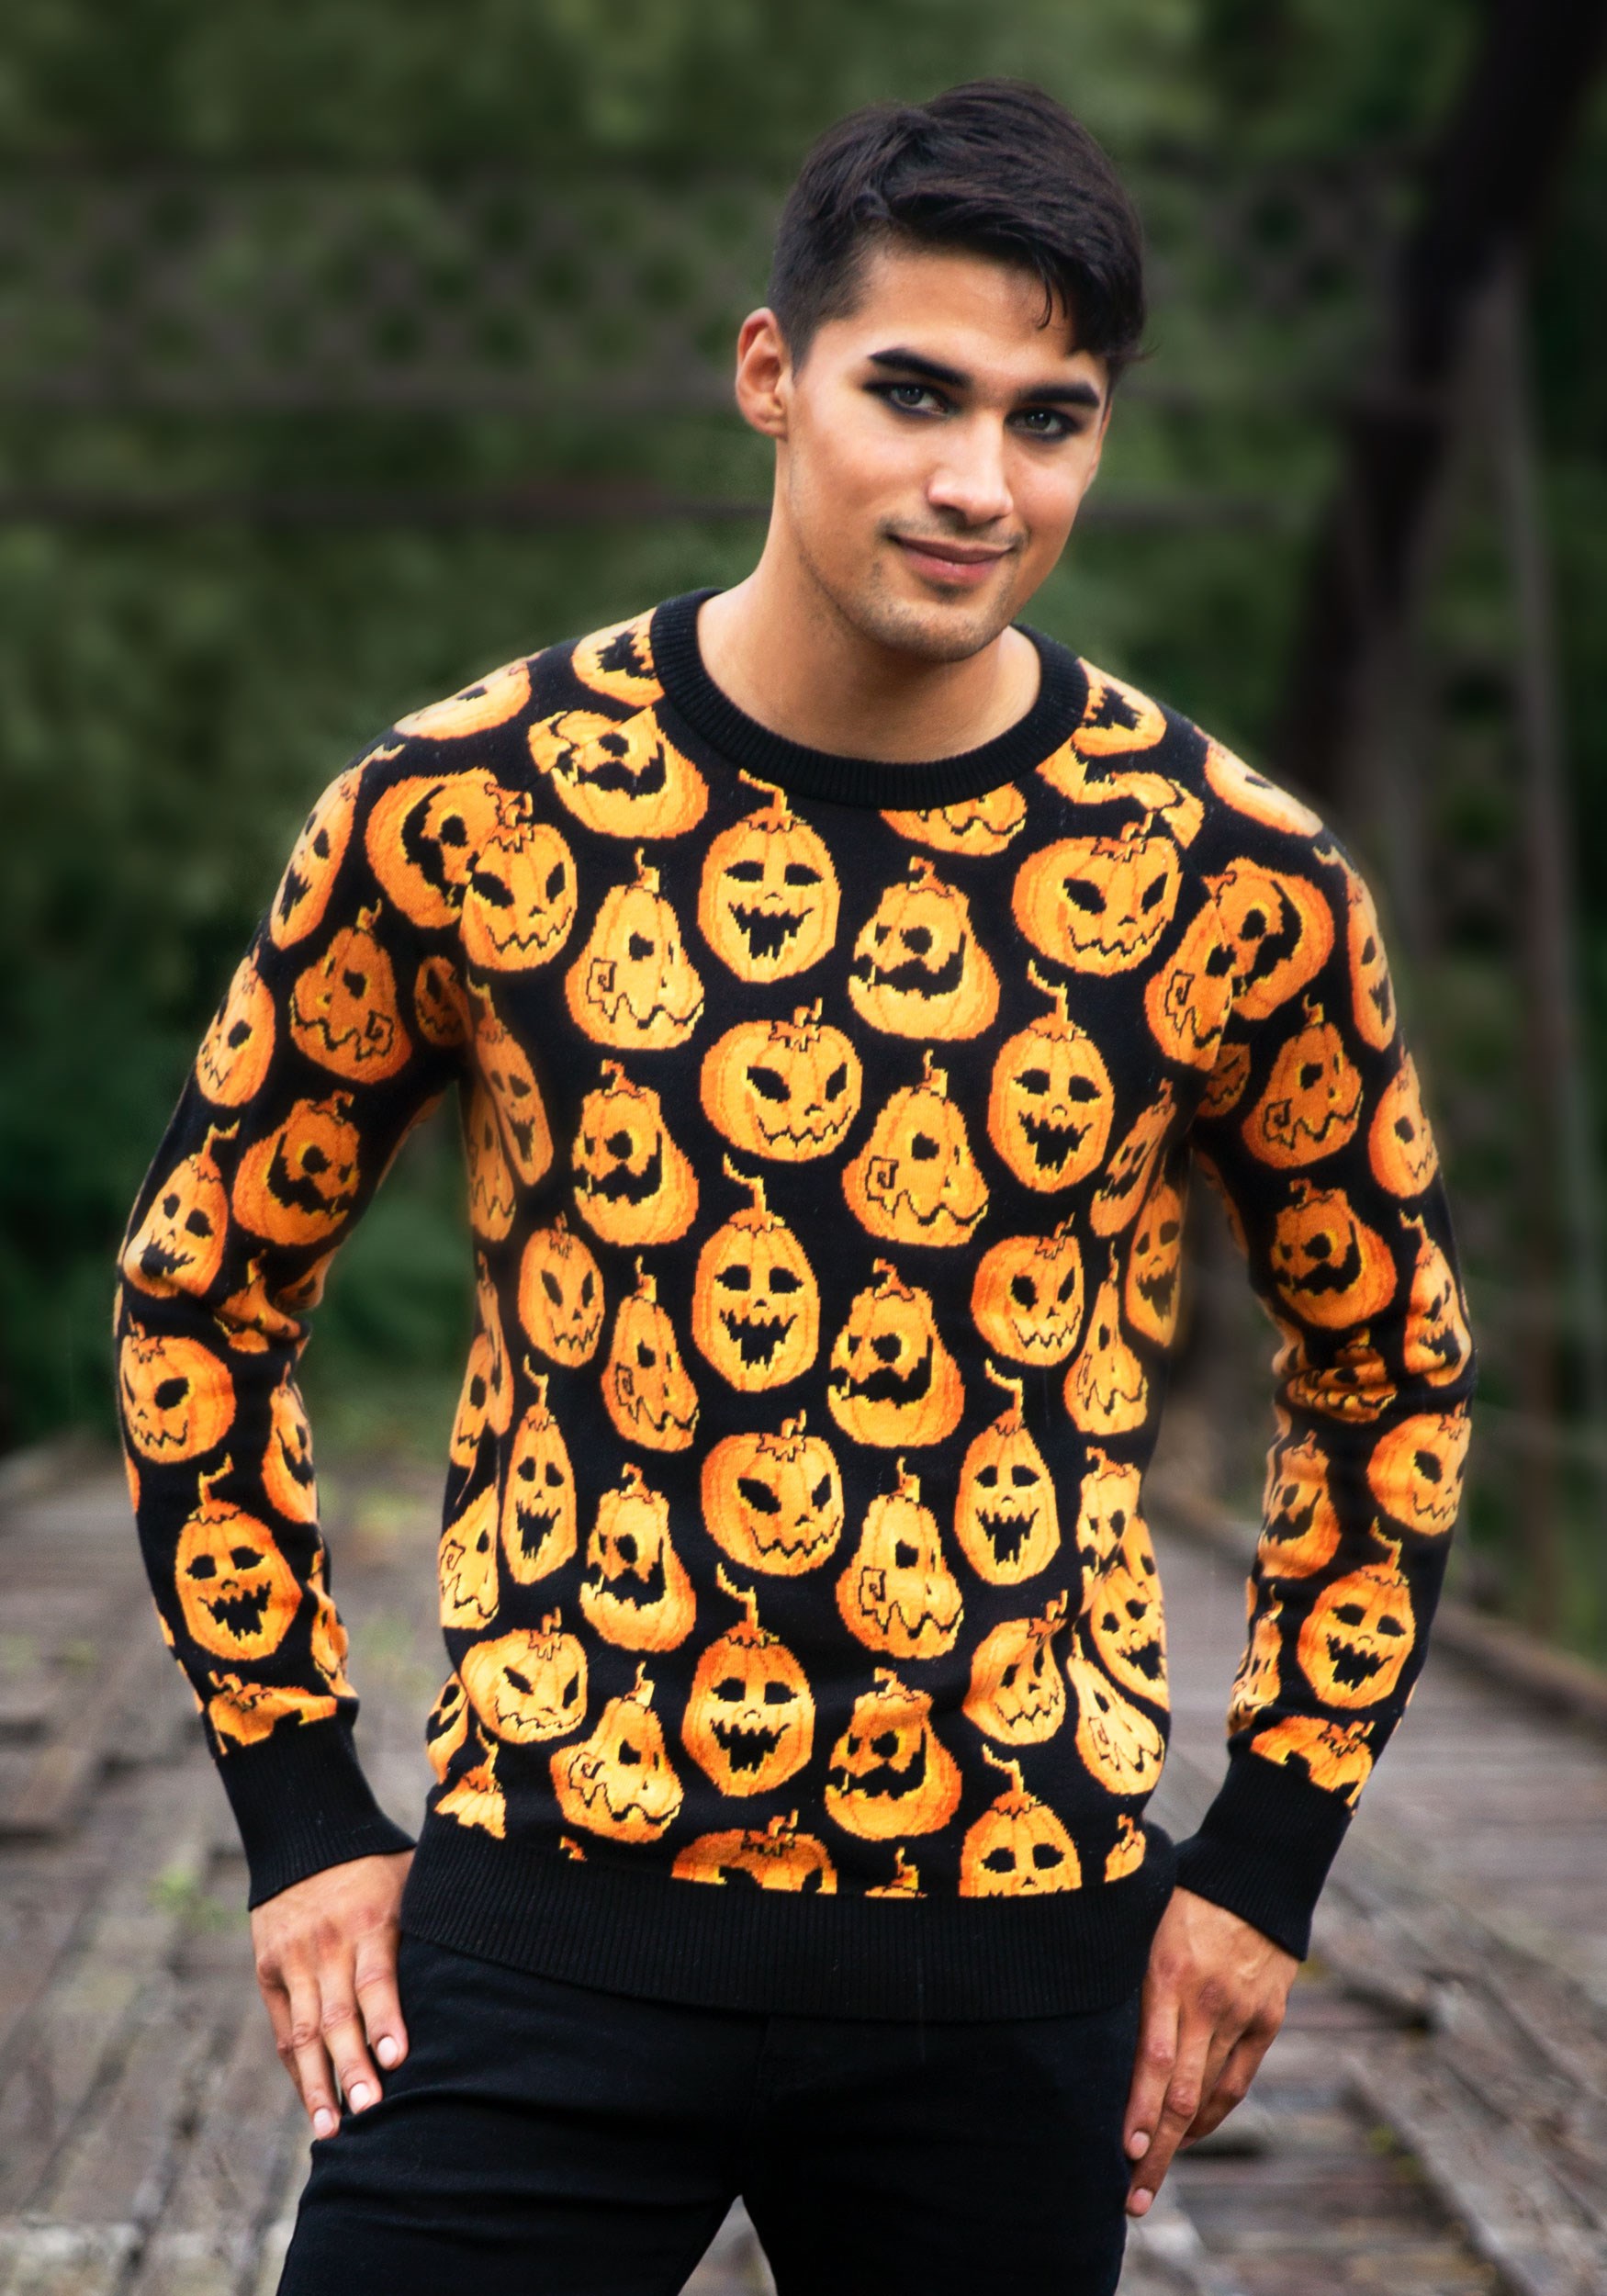 Pumpkin Frenzy Halloween Sweater For Adults